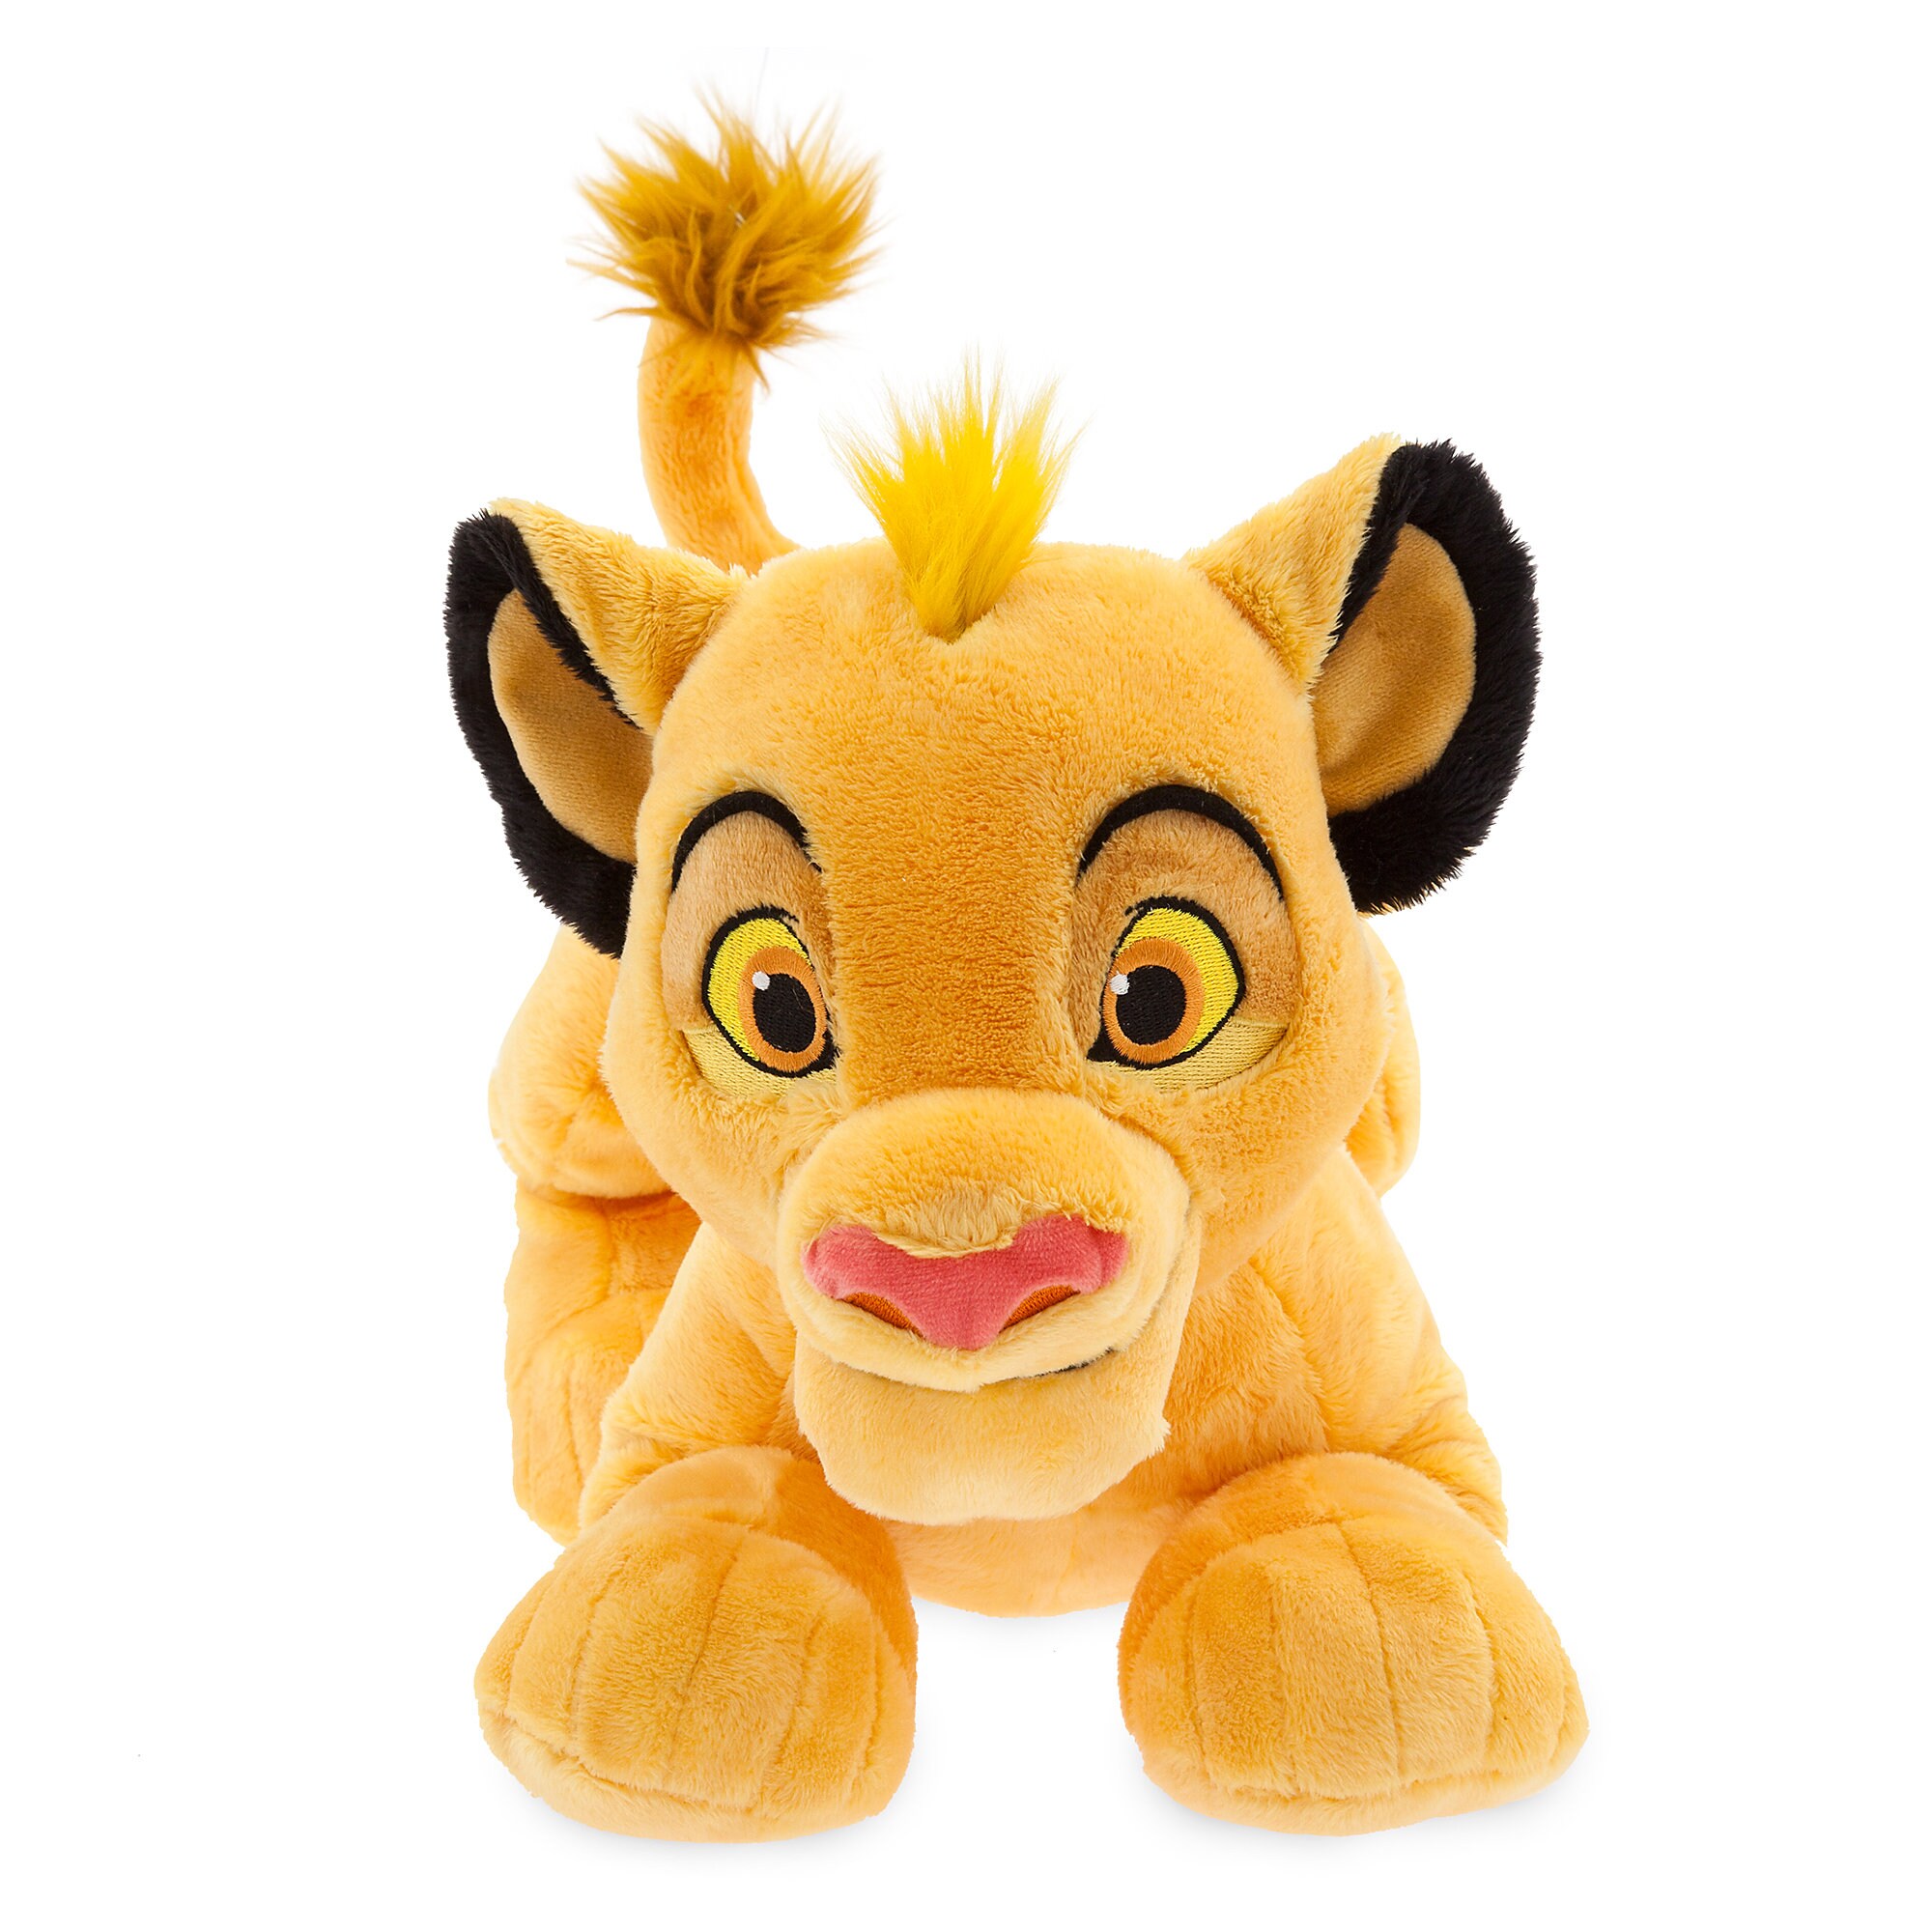 Simba Plush - The Lion King - Medium - 17''